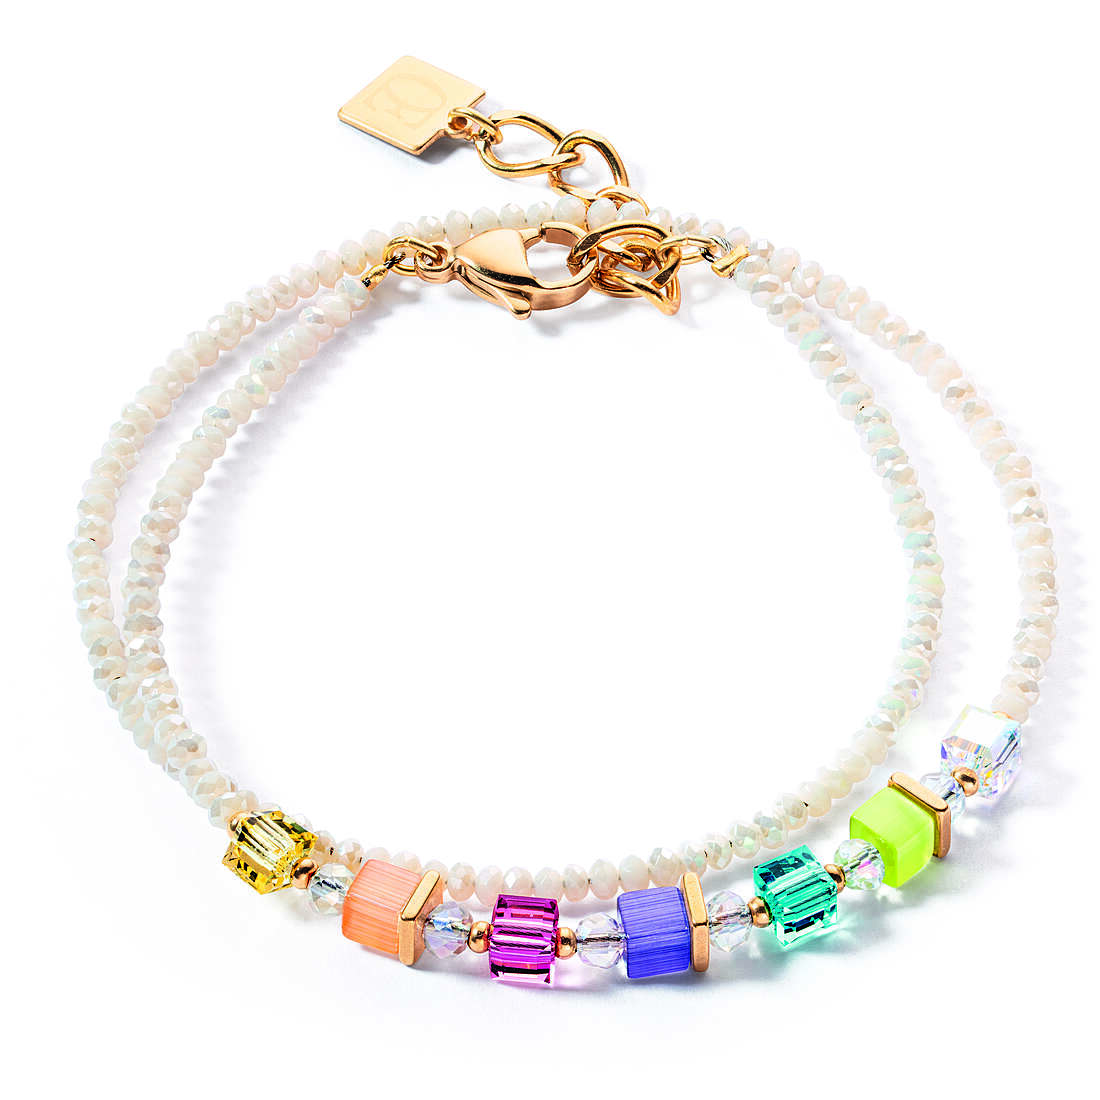 bracelet woman jewellery Coeur De Lion Joyful Colours 4564/30-1522